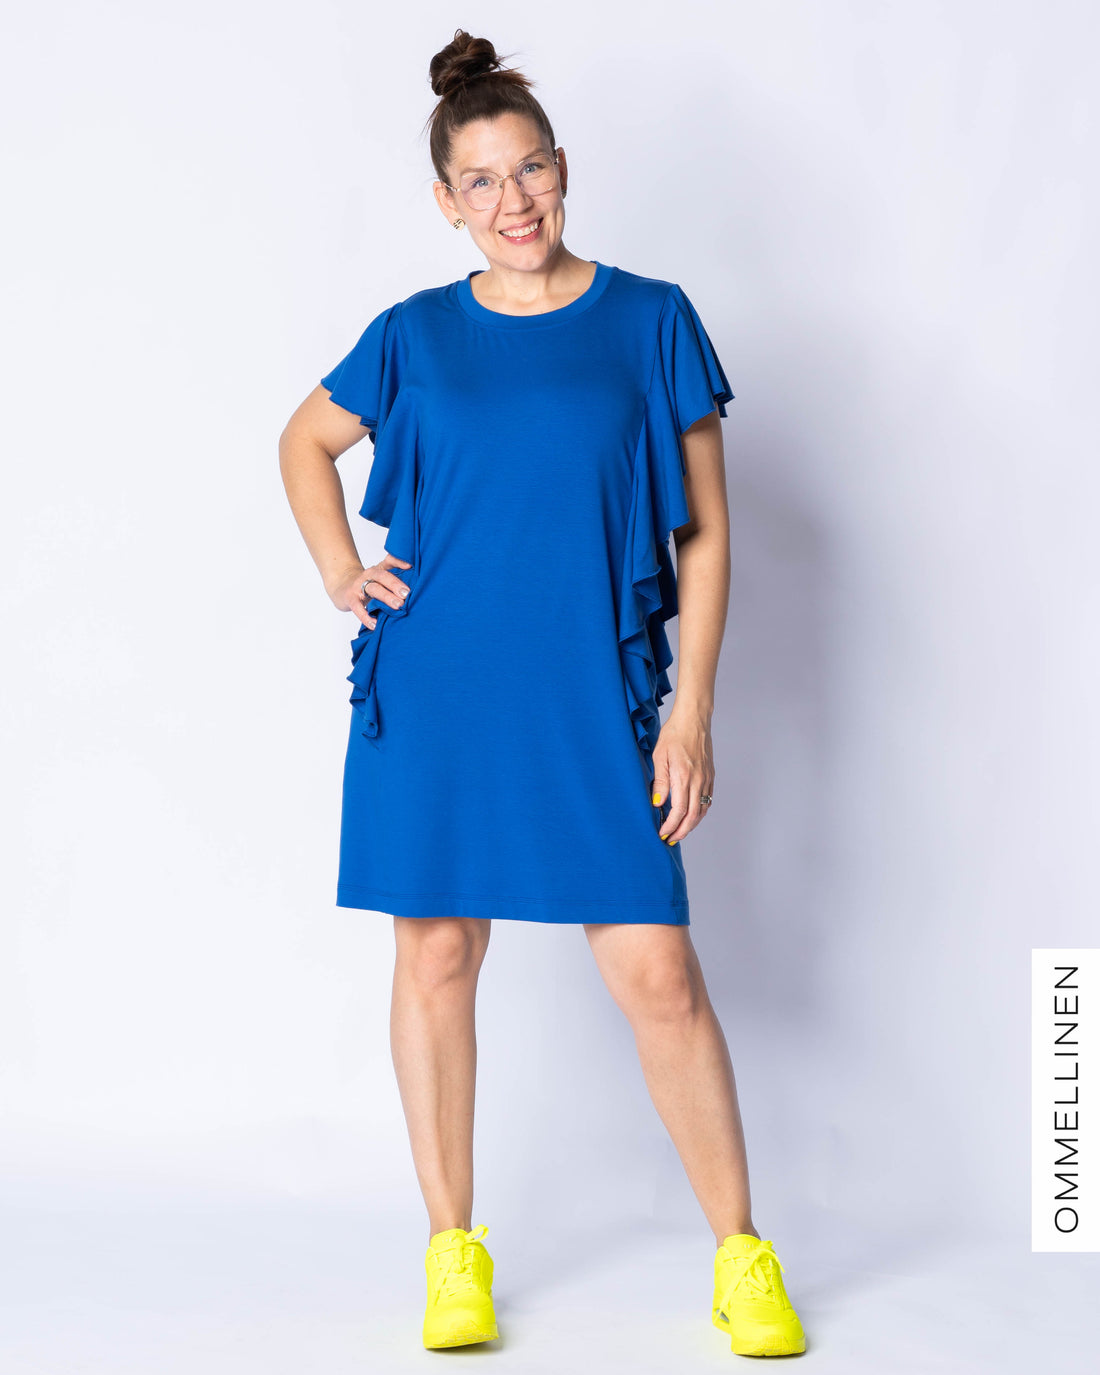 FRILLA dress, blue